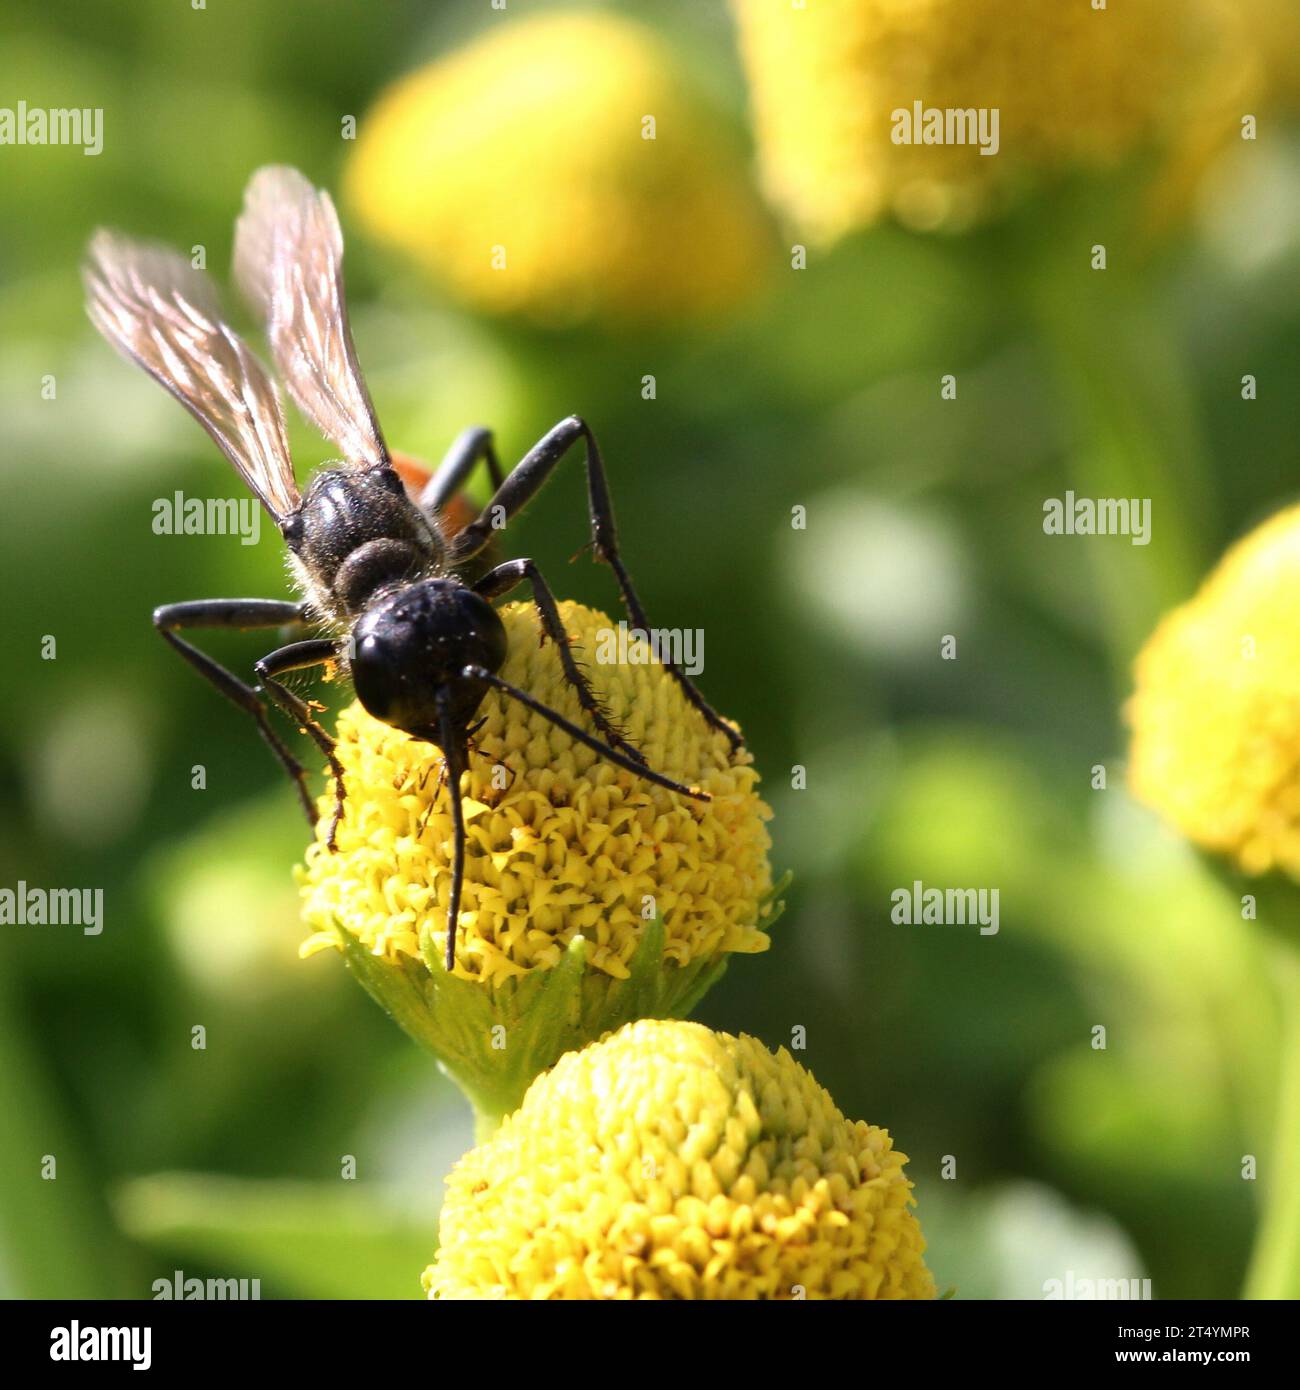 Thread-waisted wasp Stock Photo